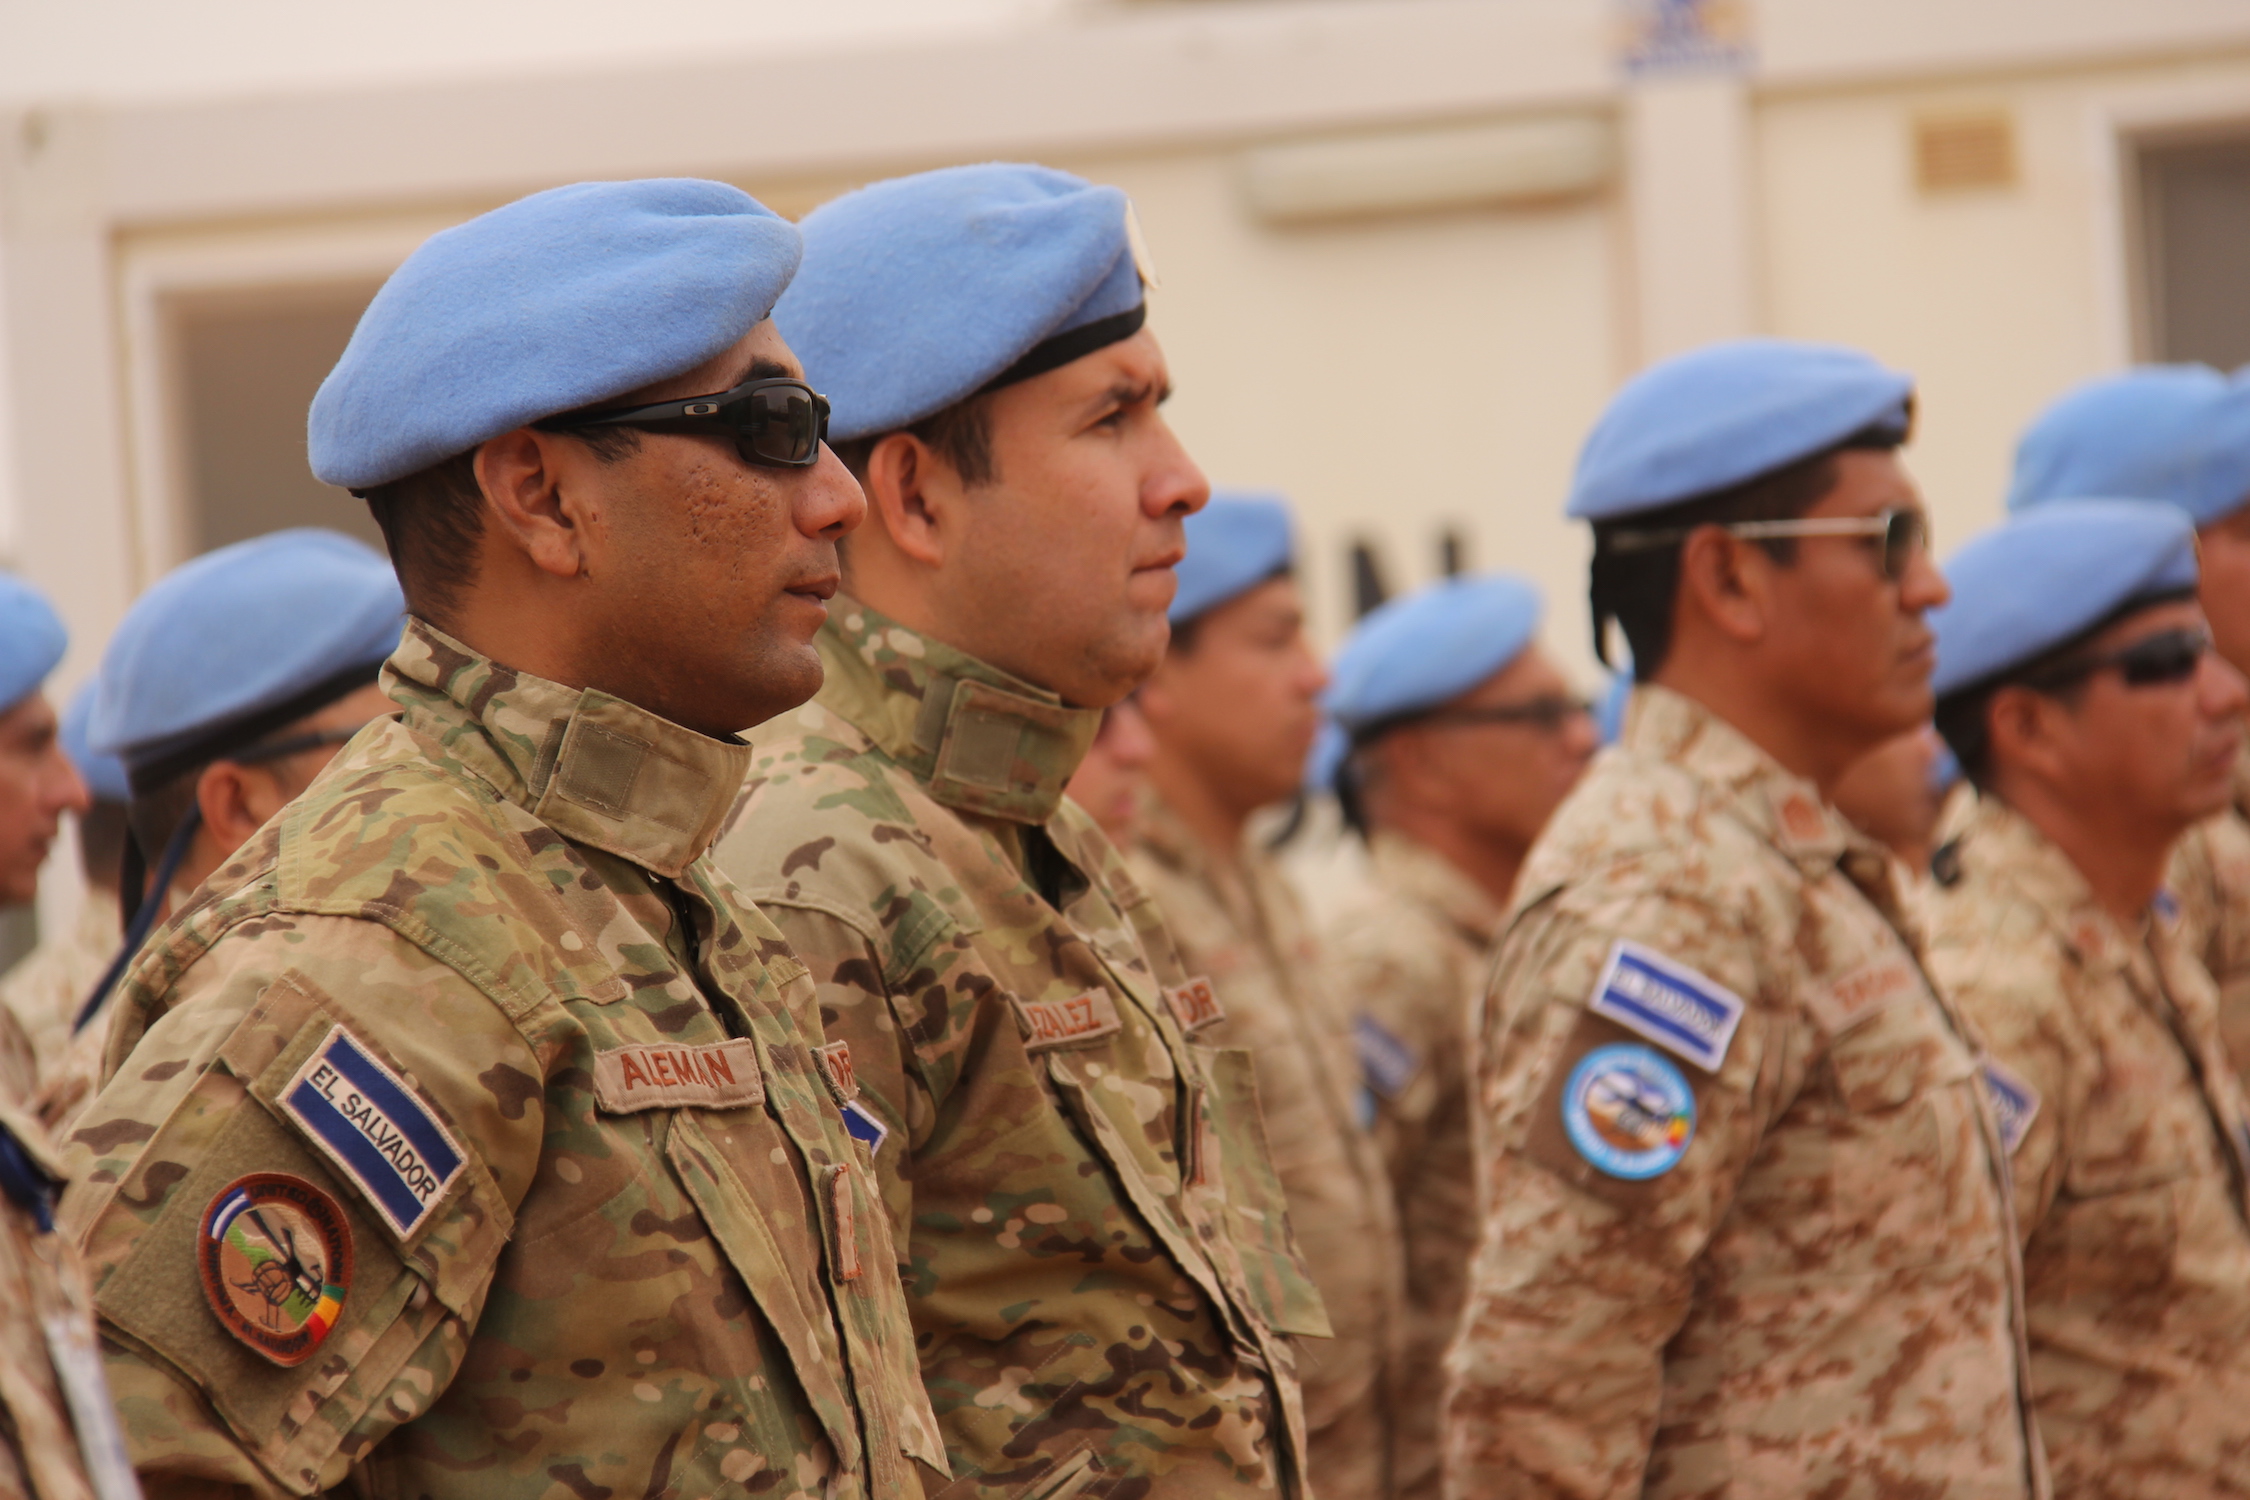 Minusma peacekeepers in Timbuktu